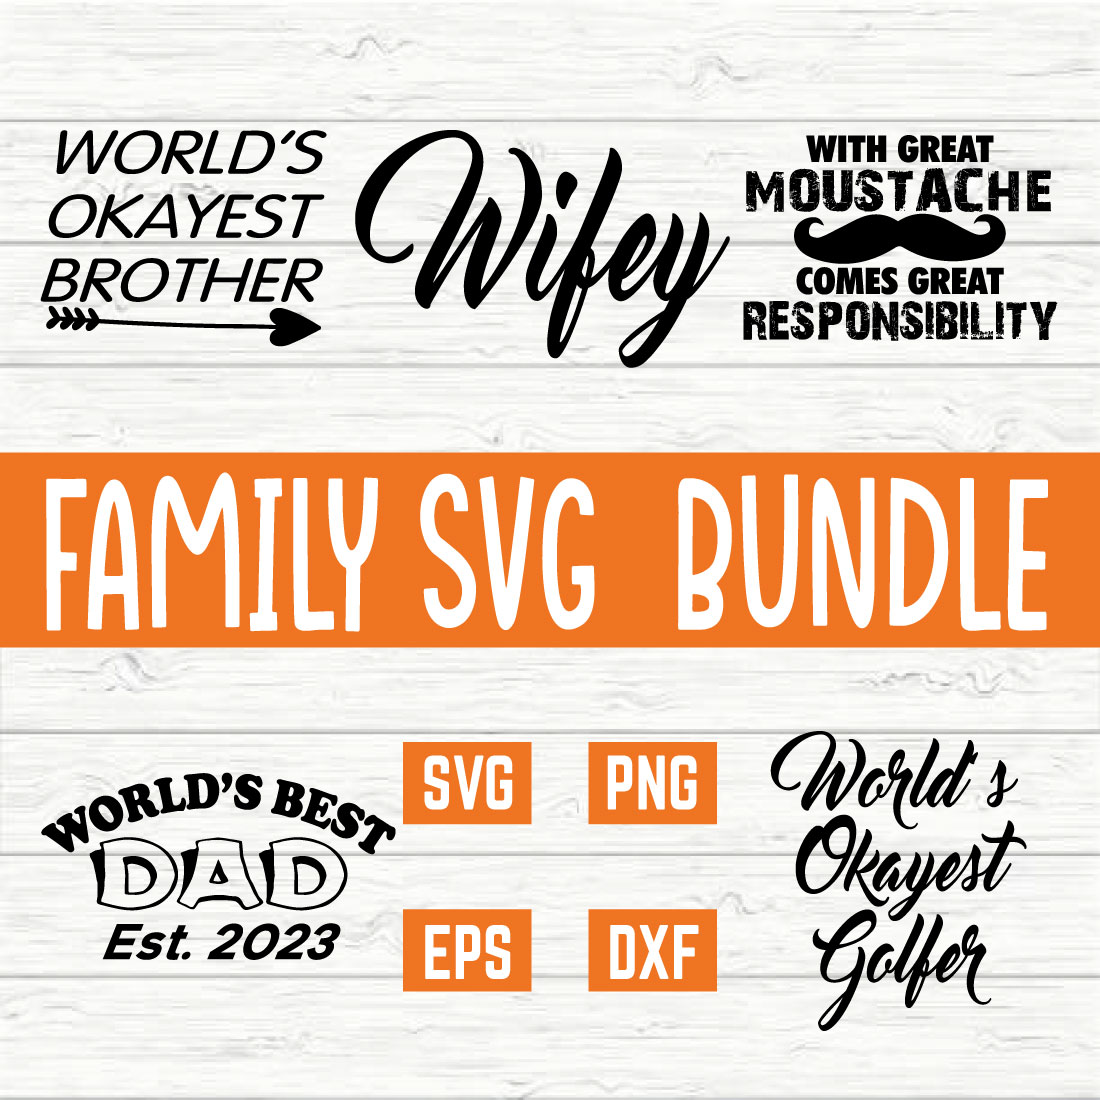 Family Svg Bundle vol 32 preview image.